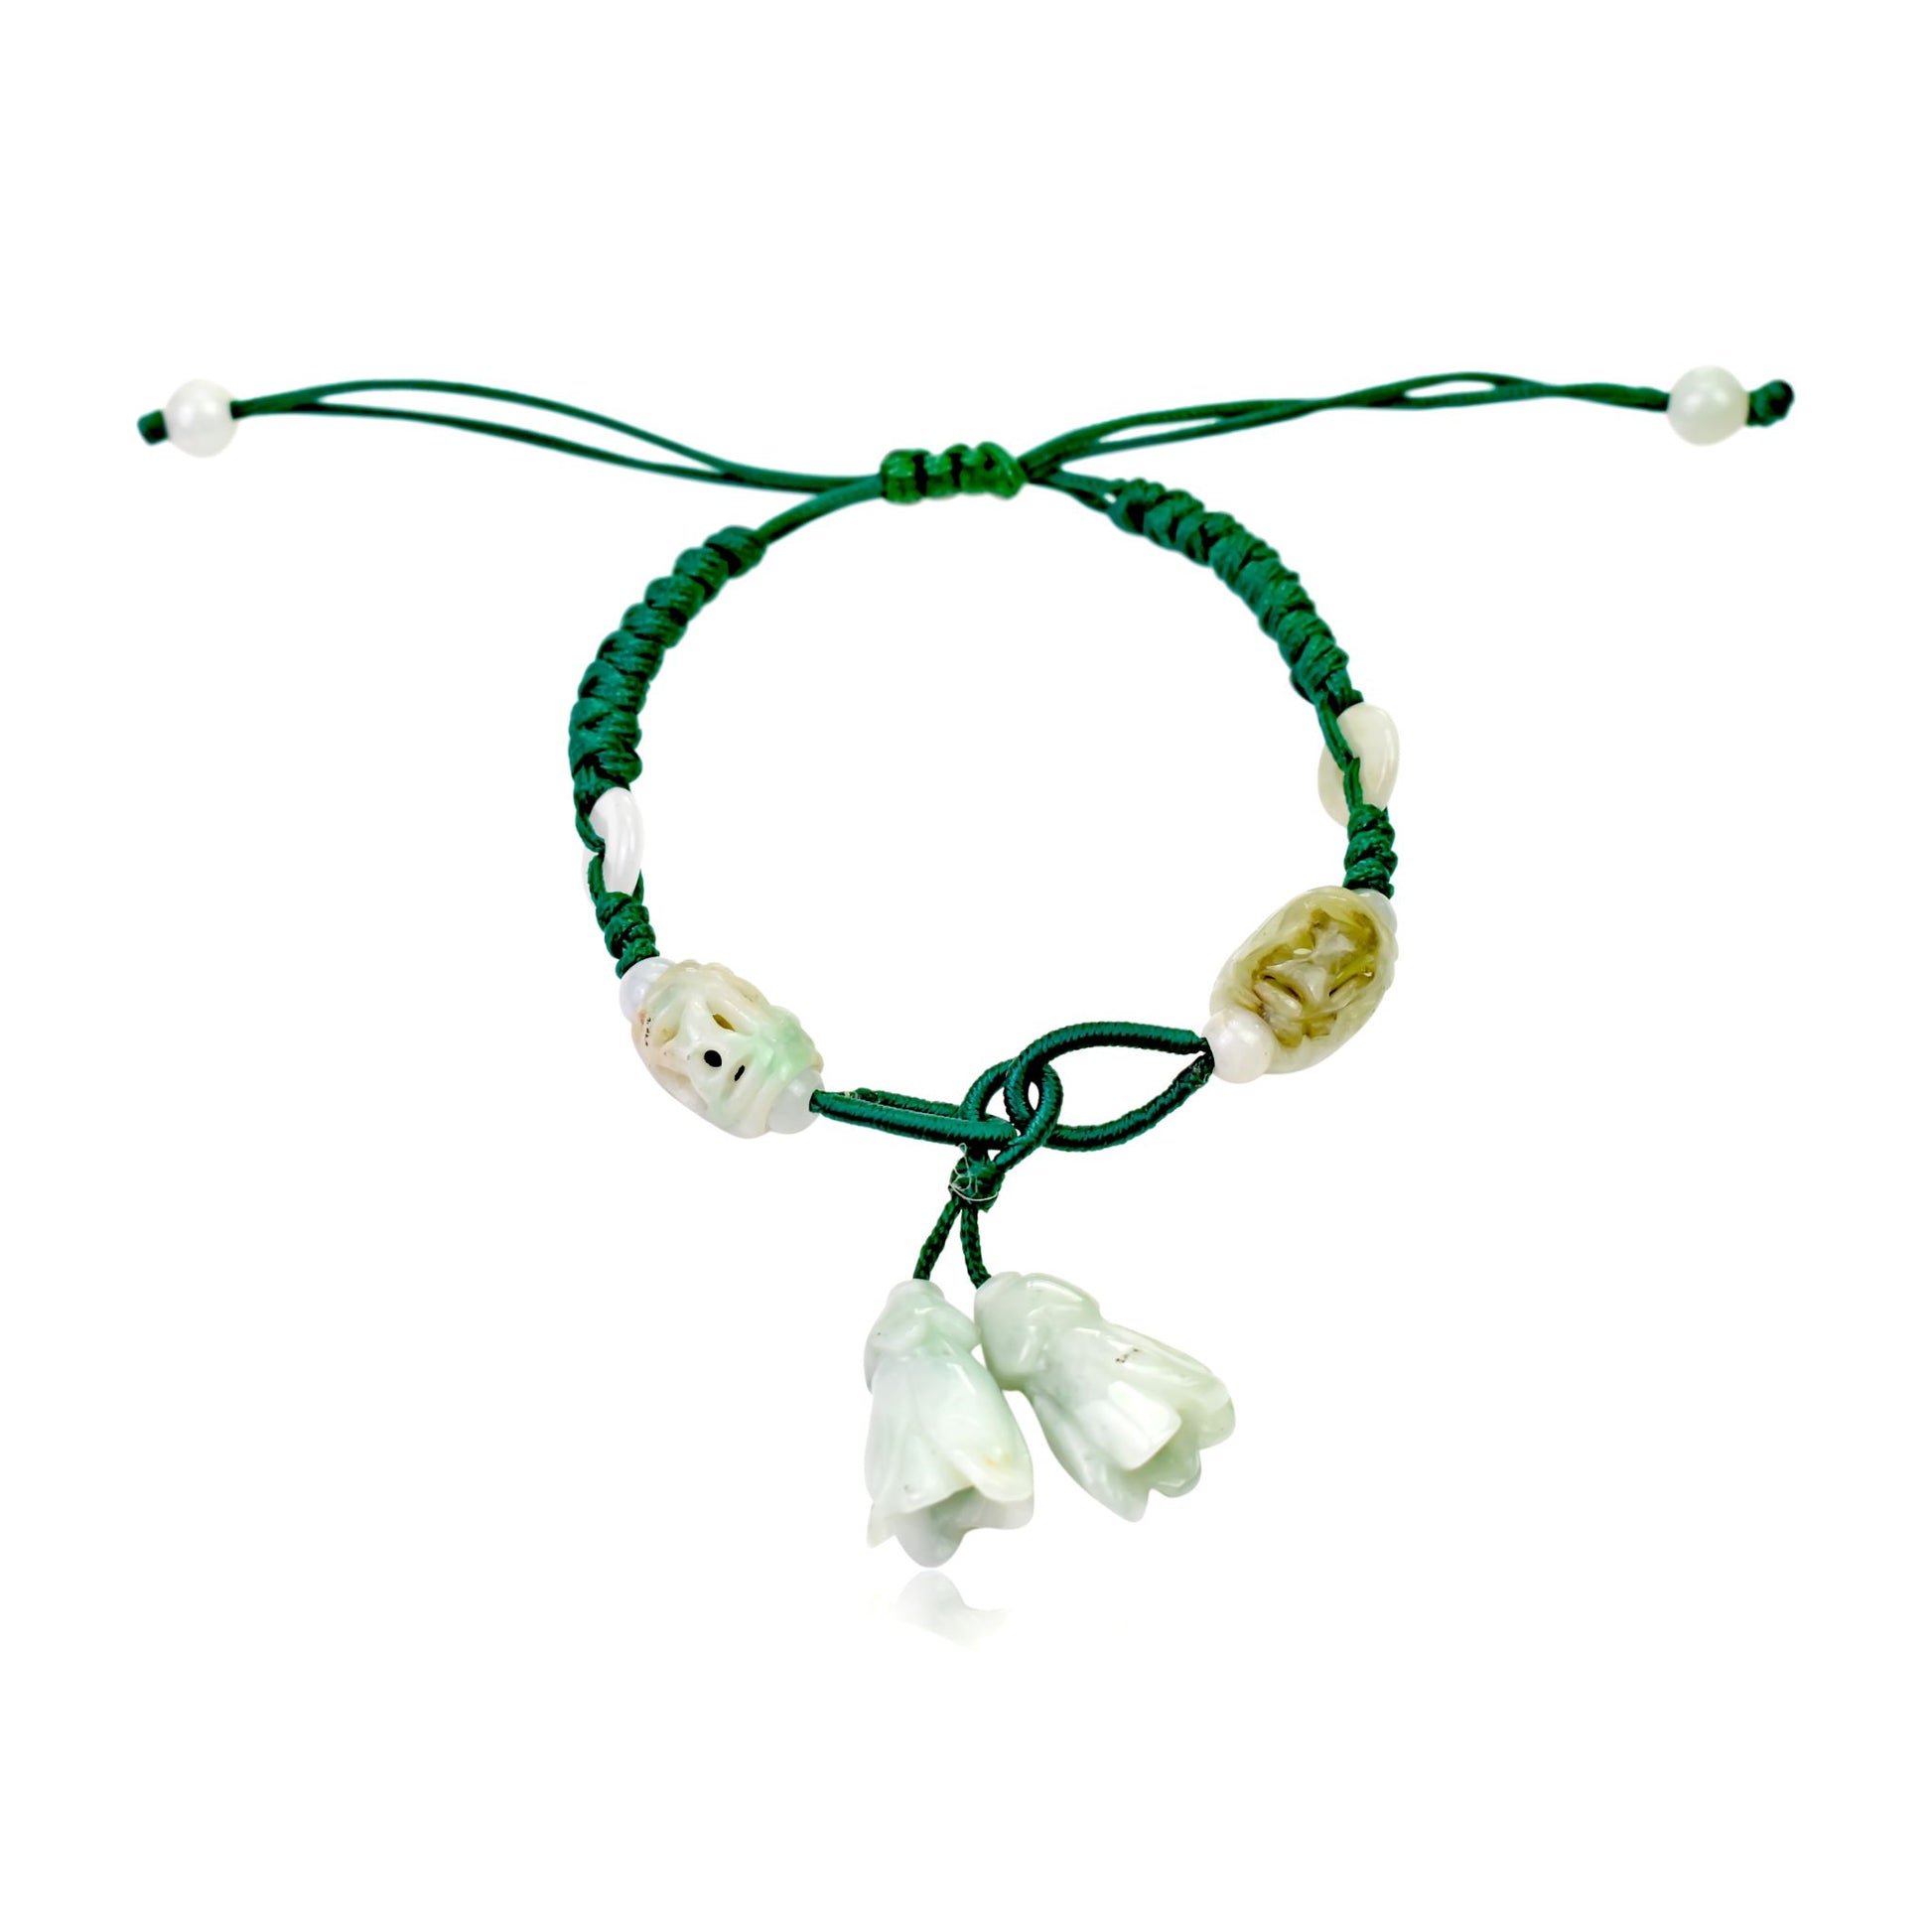 Accessorize in Style with Dangling Bellflower Jade Bracelet